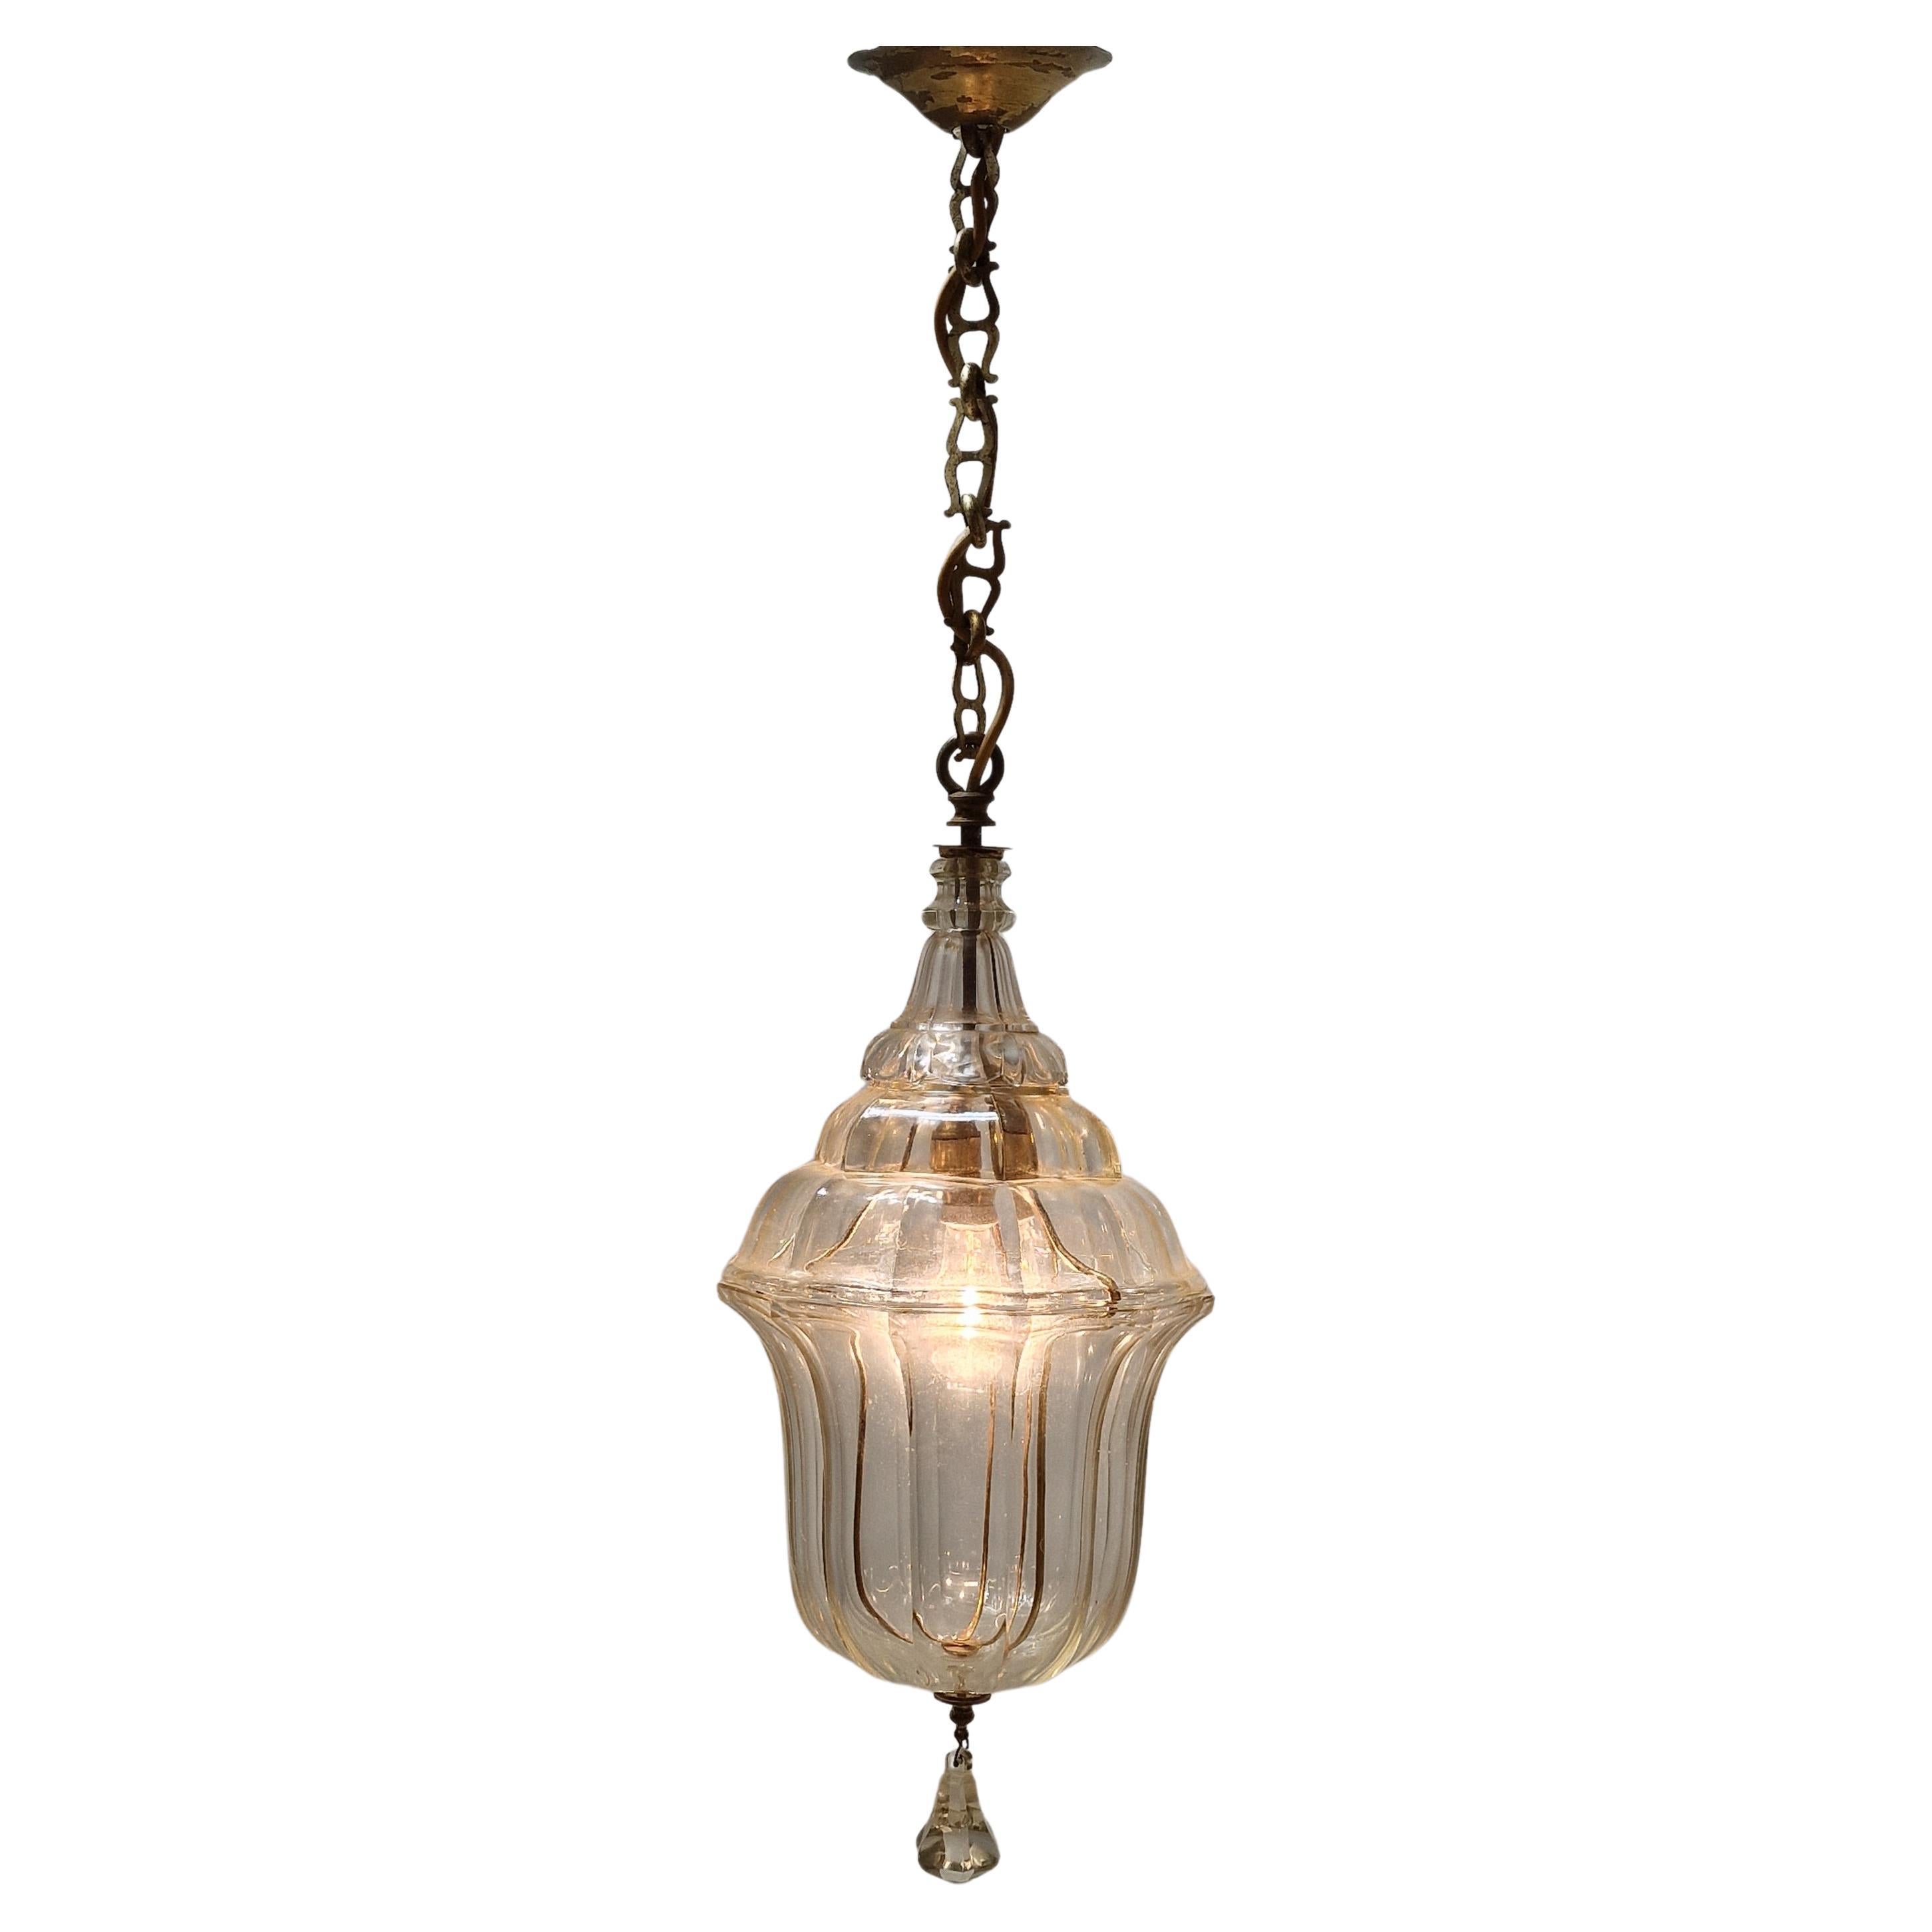 Italian Cut Crystal Hanging Lantern or Lamp, 1900